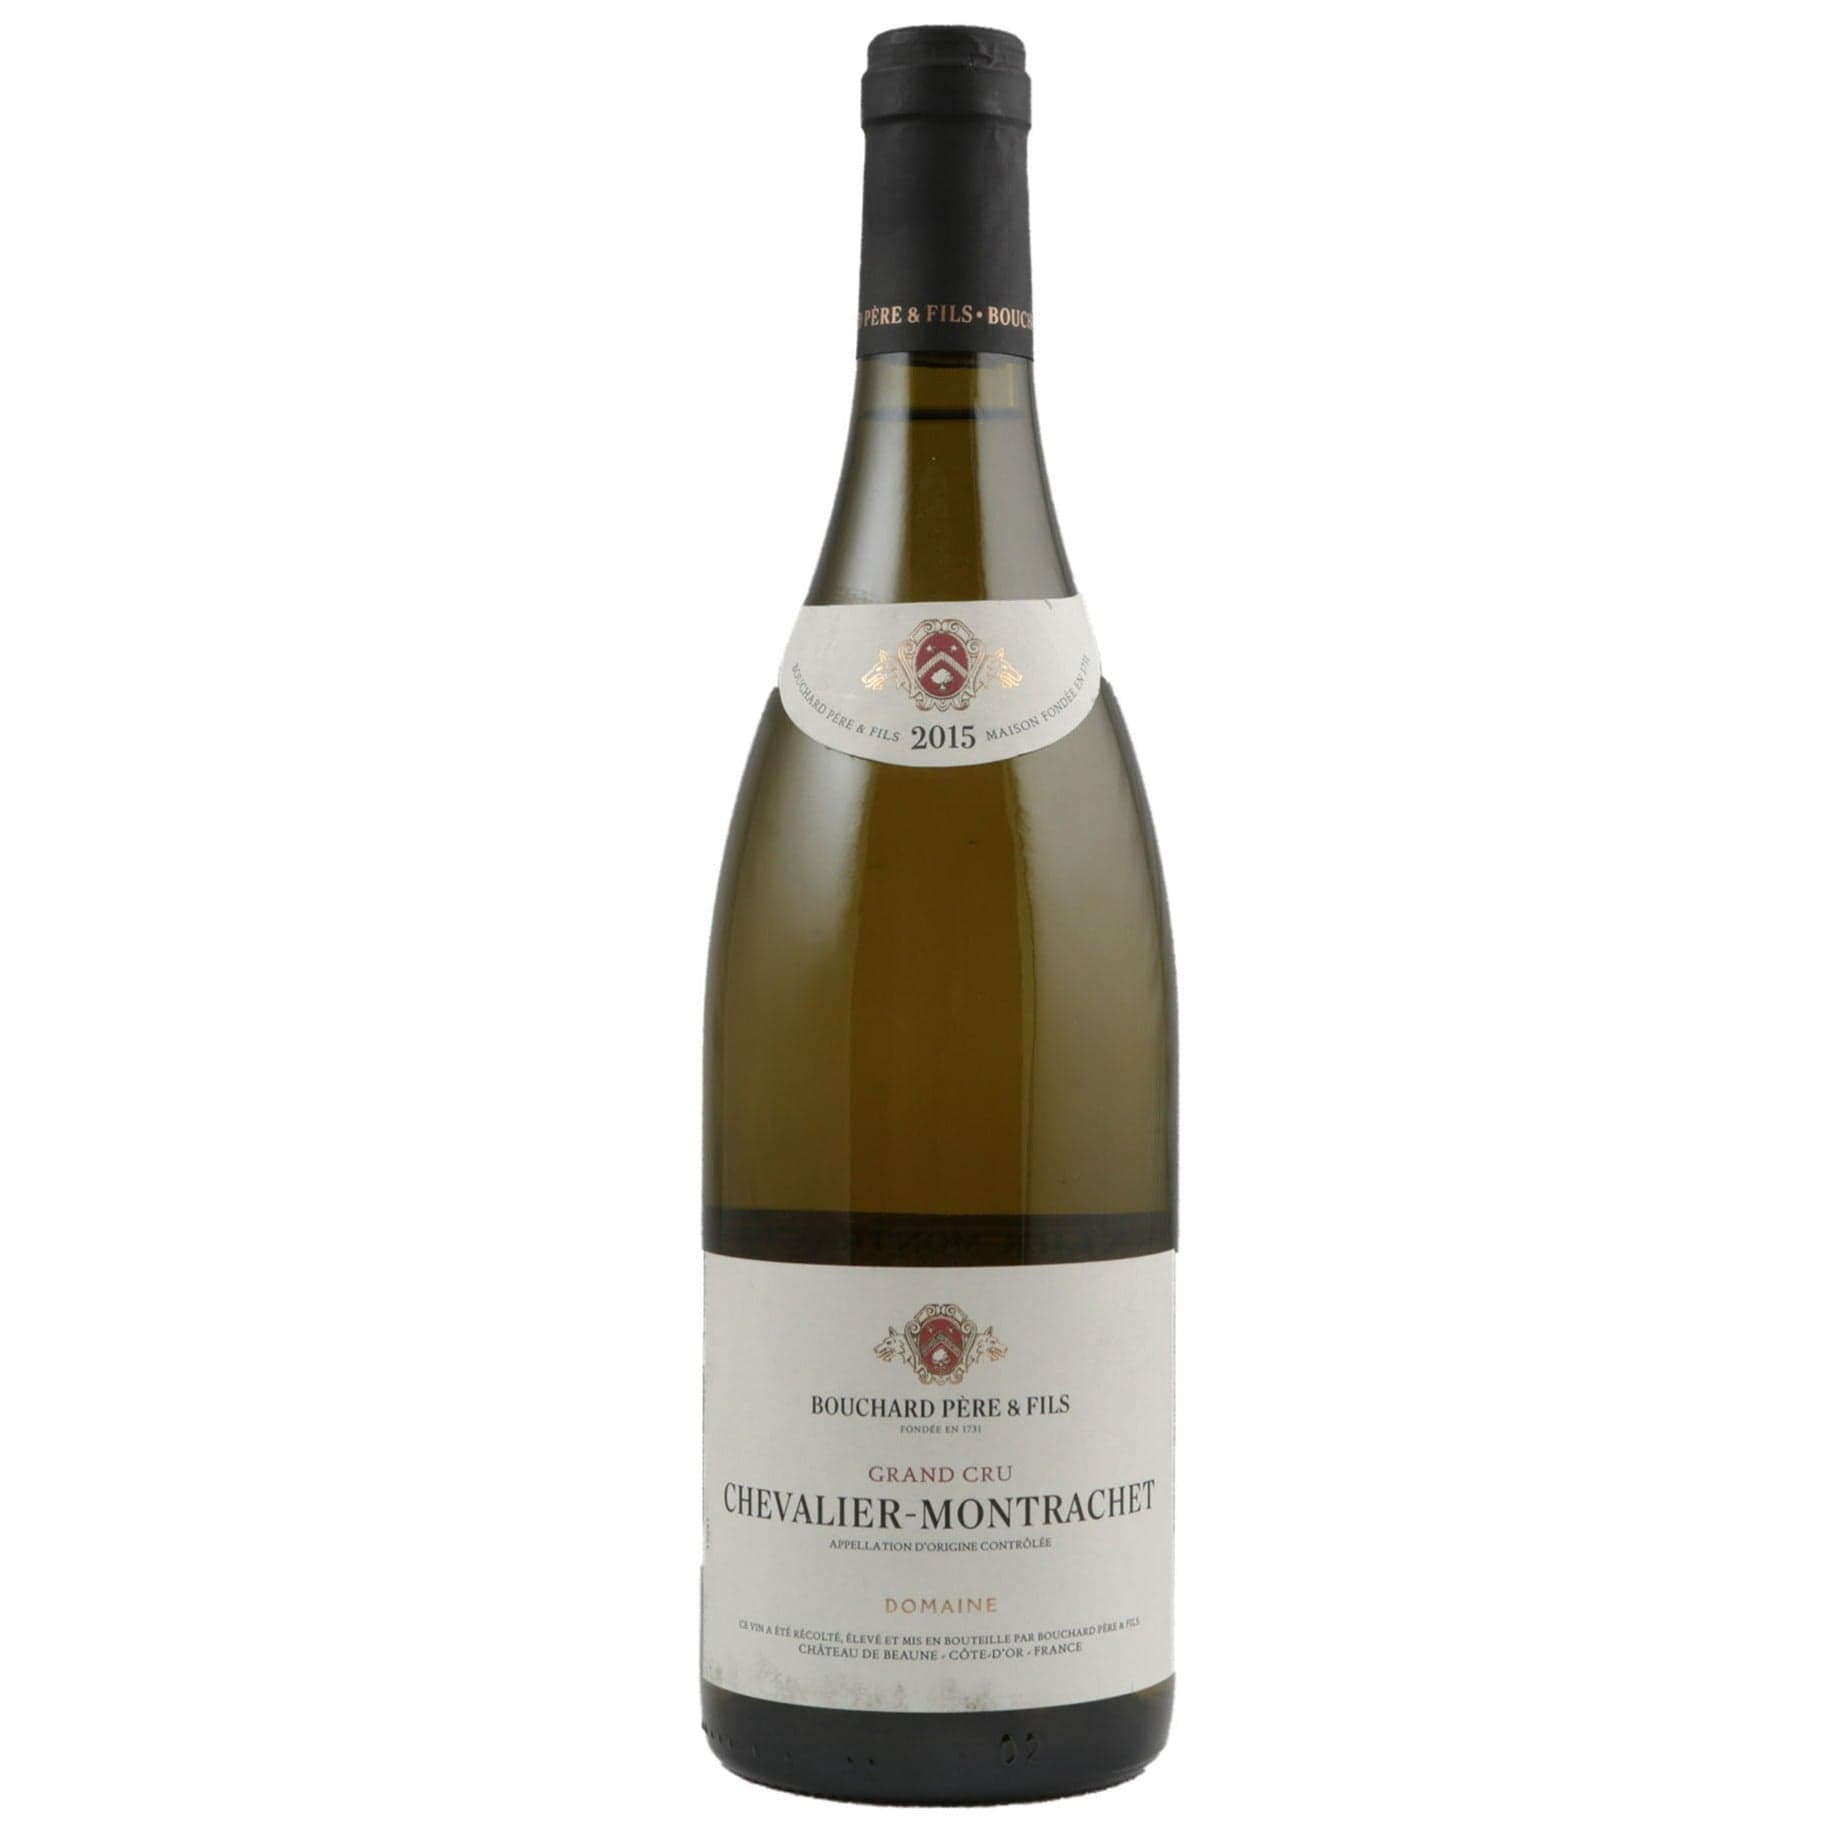 Single bottle of White wine Bouchard Pere et Fils, Chevalier Montrachet Grand Cru, Puligny Montrachet, 2015 100% Chardonnay